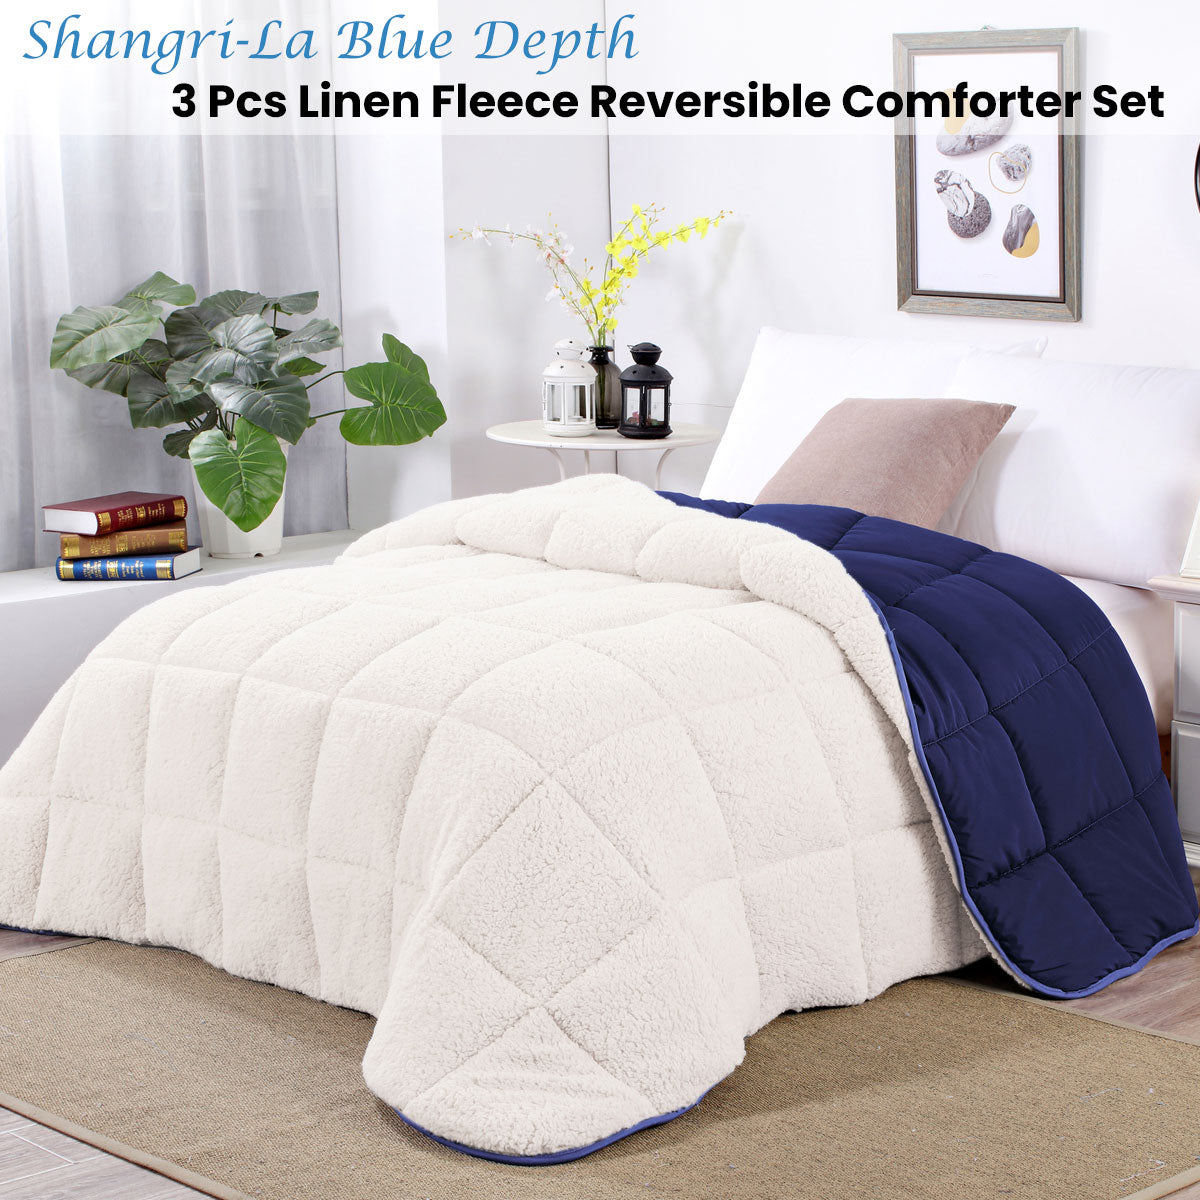 Queen Shangri La Blue Depth Sherpa Fleece Reversible 3 Pcs Comforter Set - White/Blue